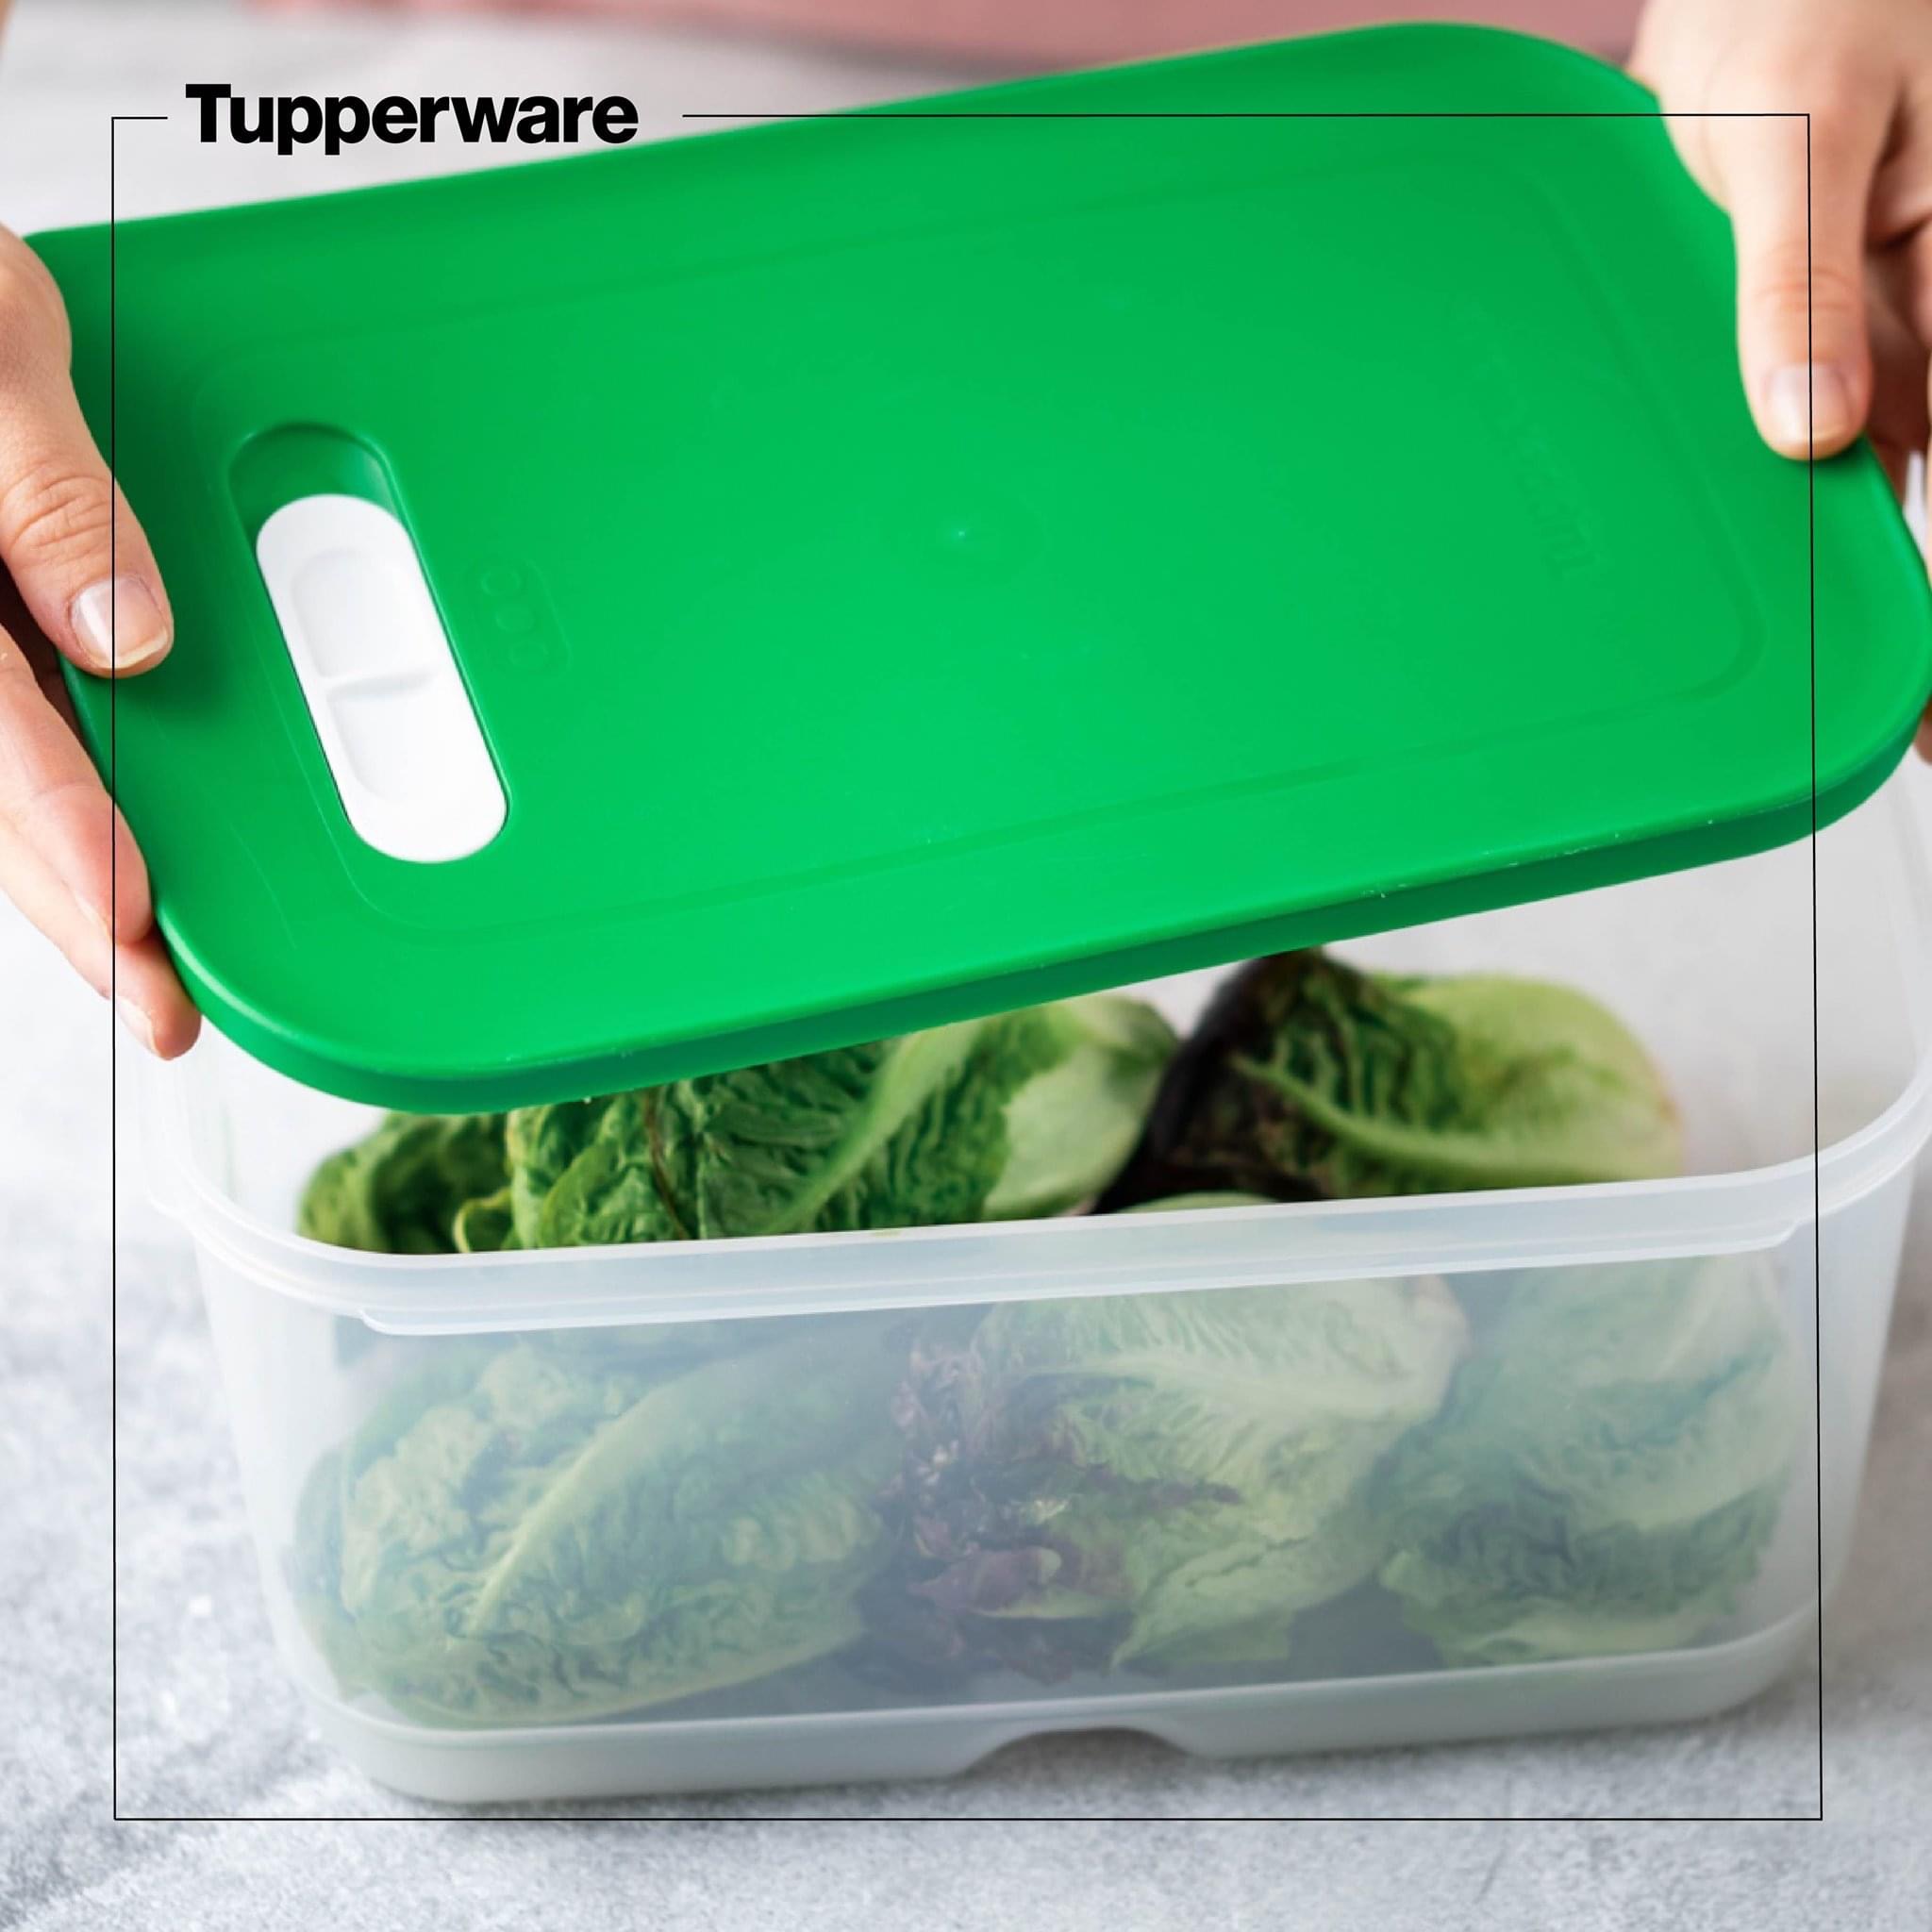 5 Tupperware FridgeSmart containers set, 9.9L 1.8L 4.4L great, produce fresh